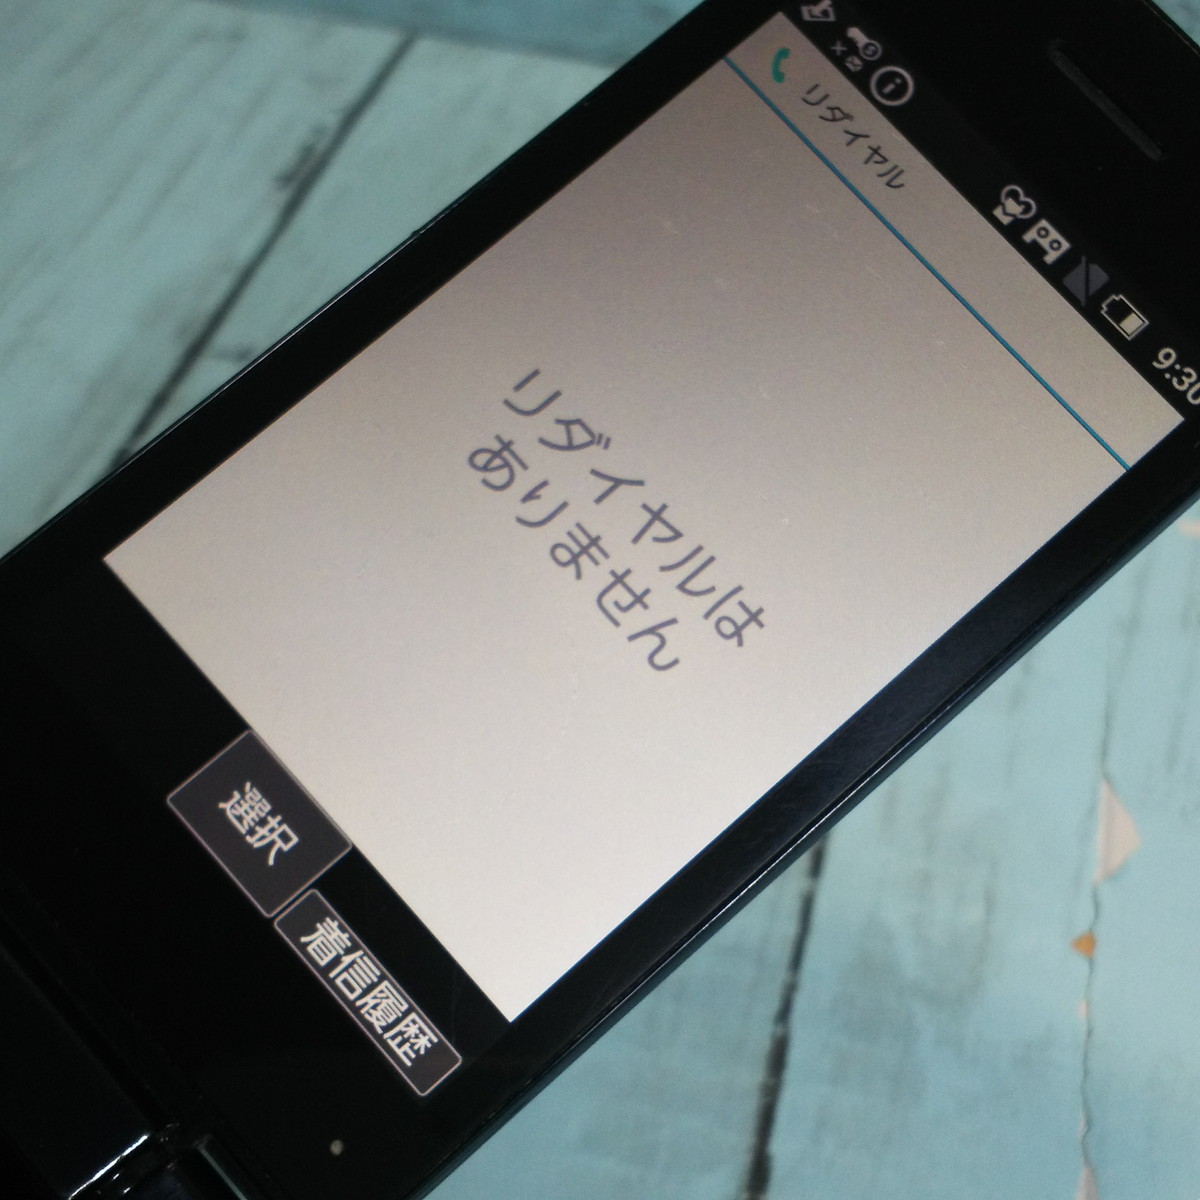 docomo SH-02L AQUOS SHARP cellular phone black body White ROM SIM lock released .SIM free 811690